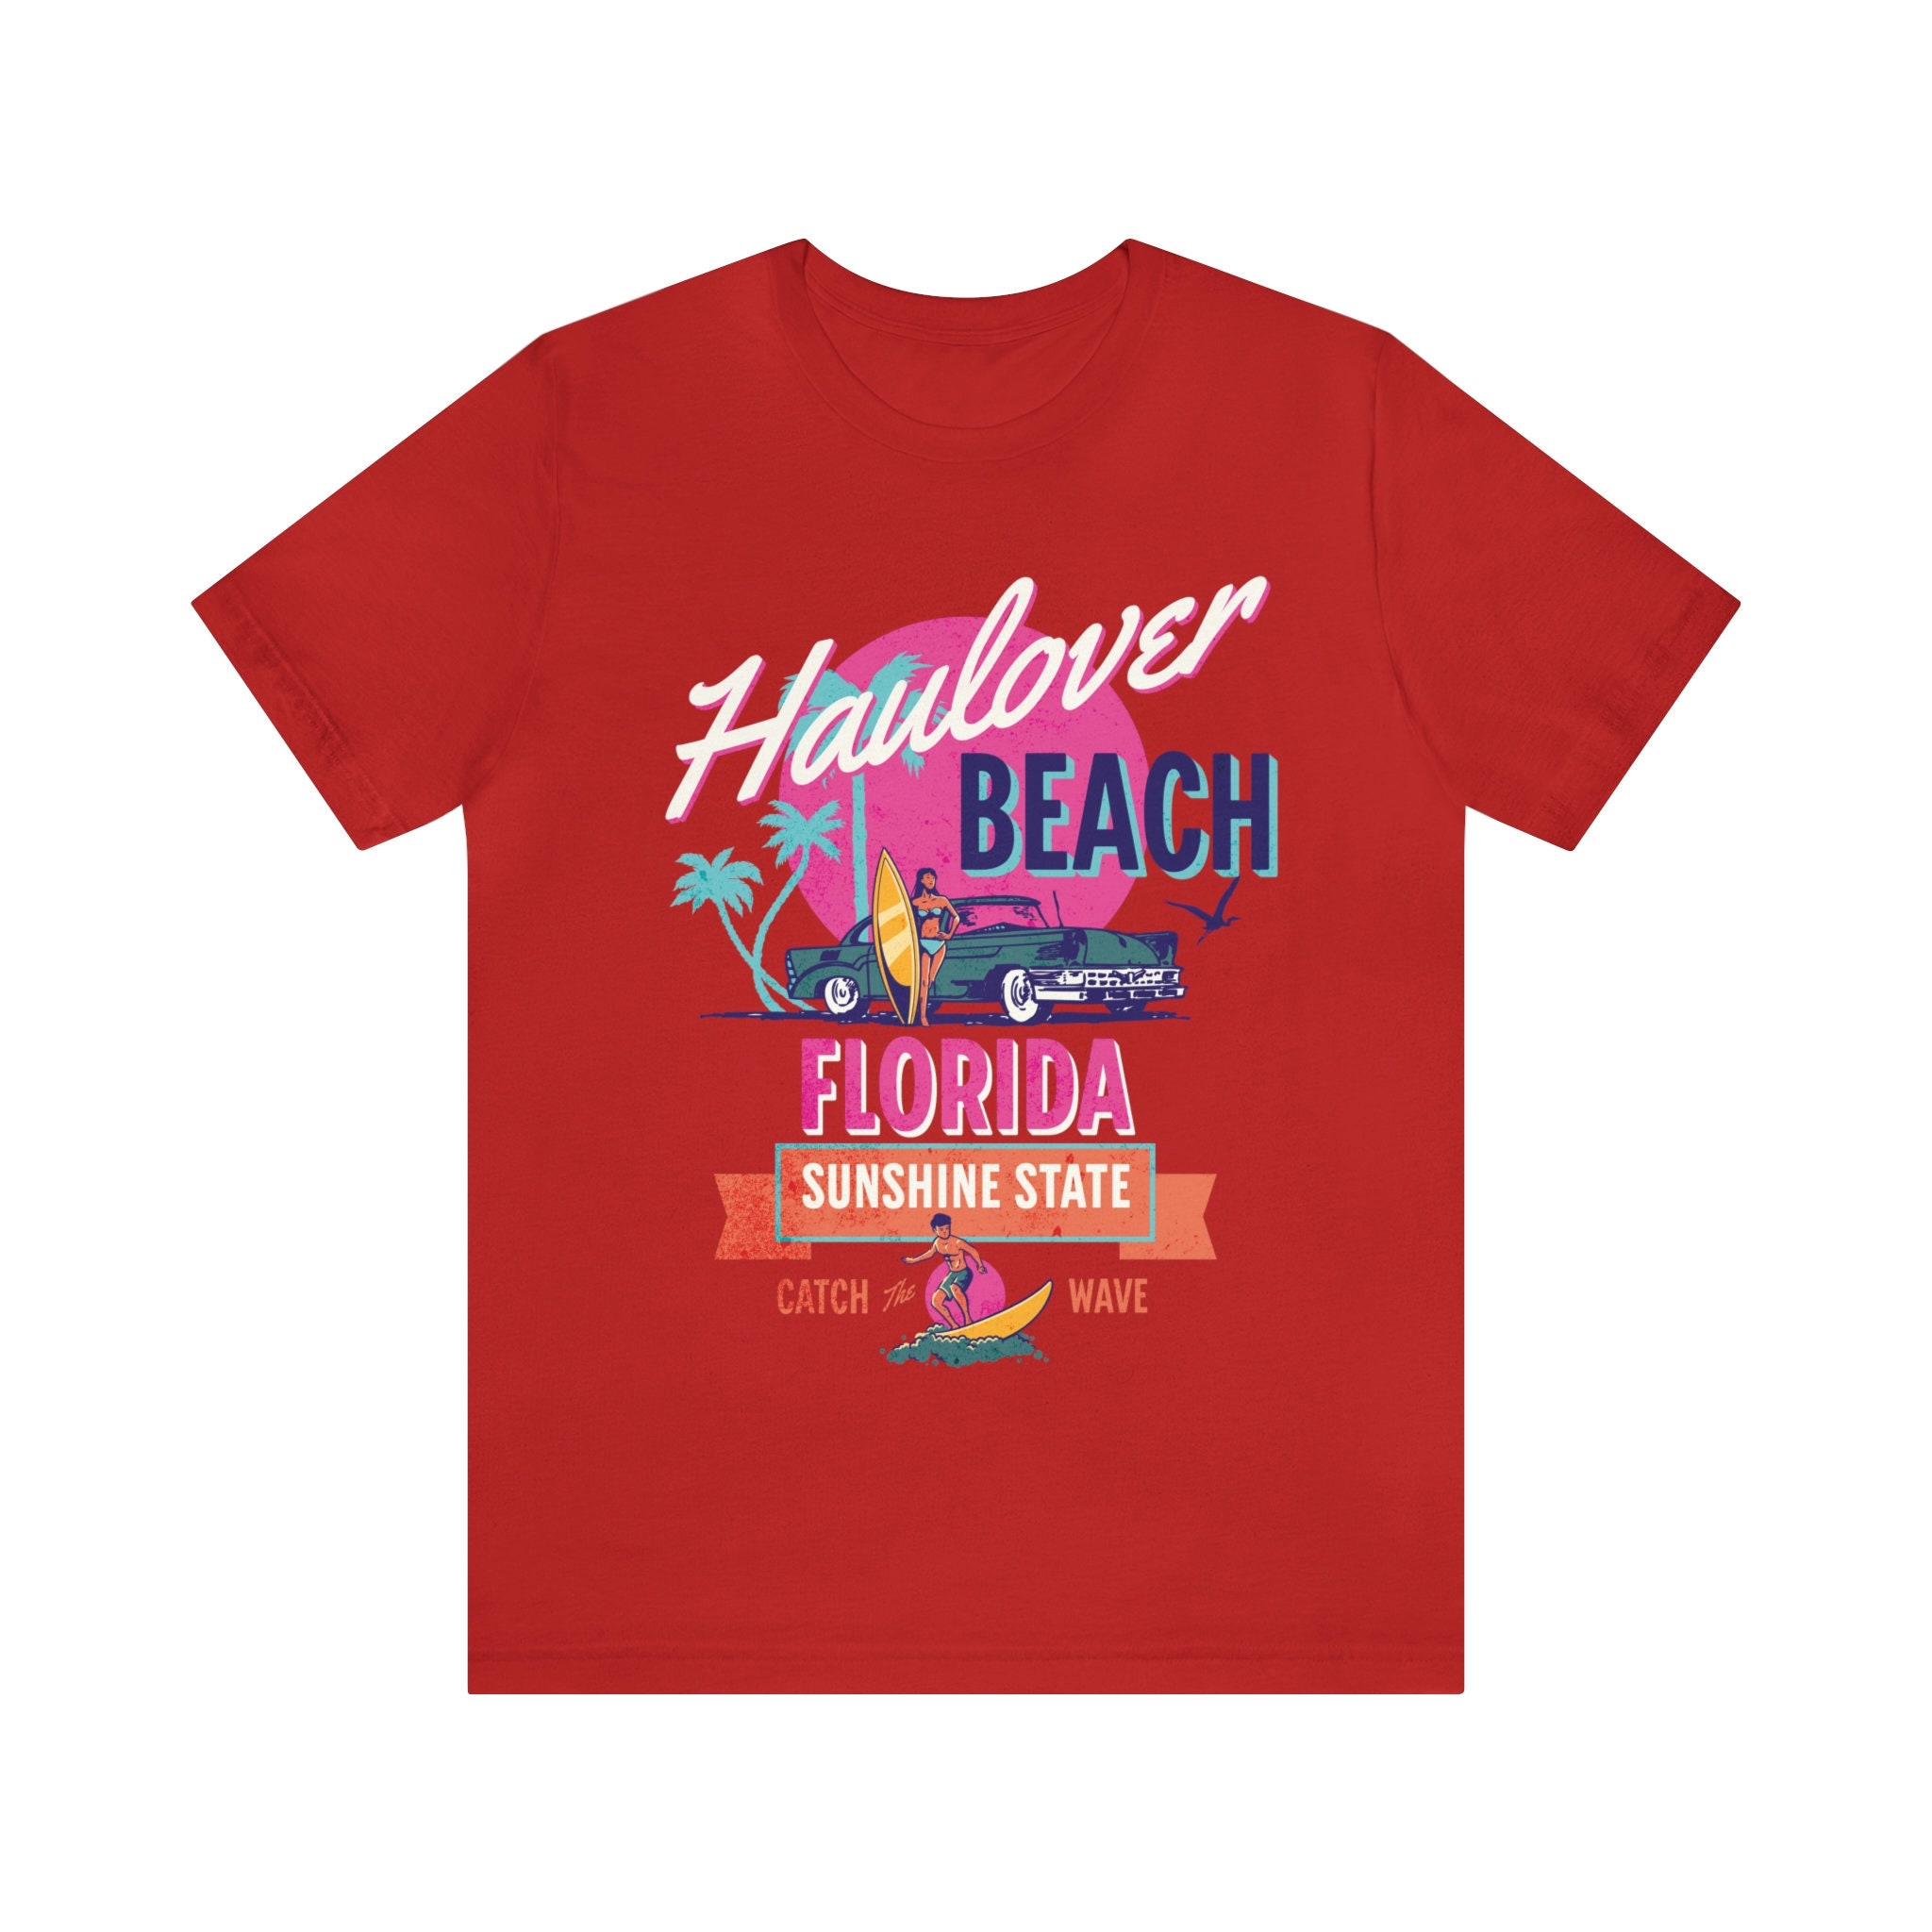 Haulover Beach Florida T-shirt Florida Tshirt Florida